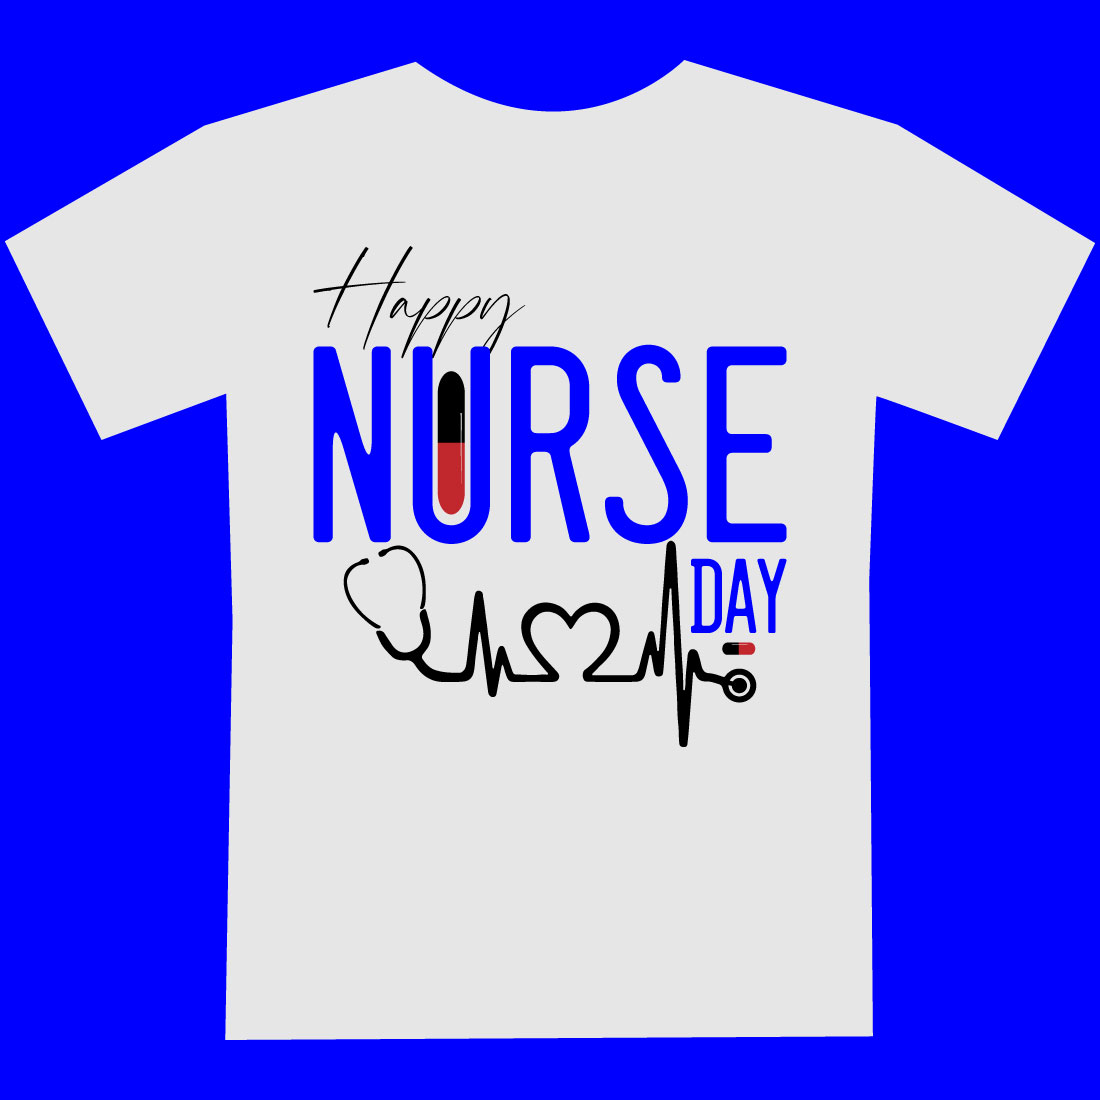 Happy Nurse day T shirt design preview image.